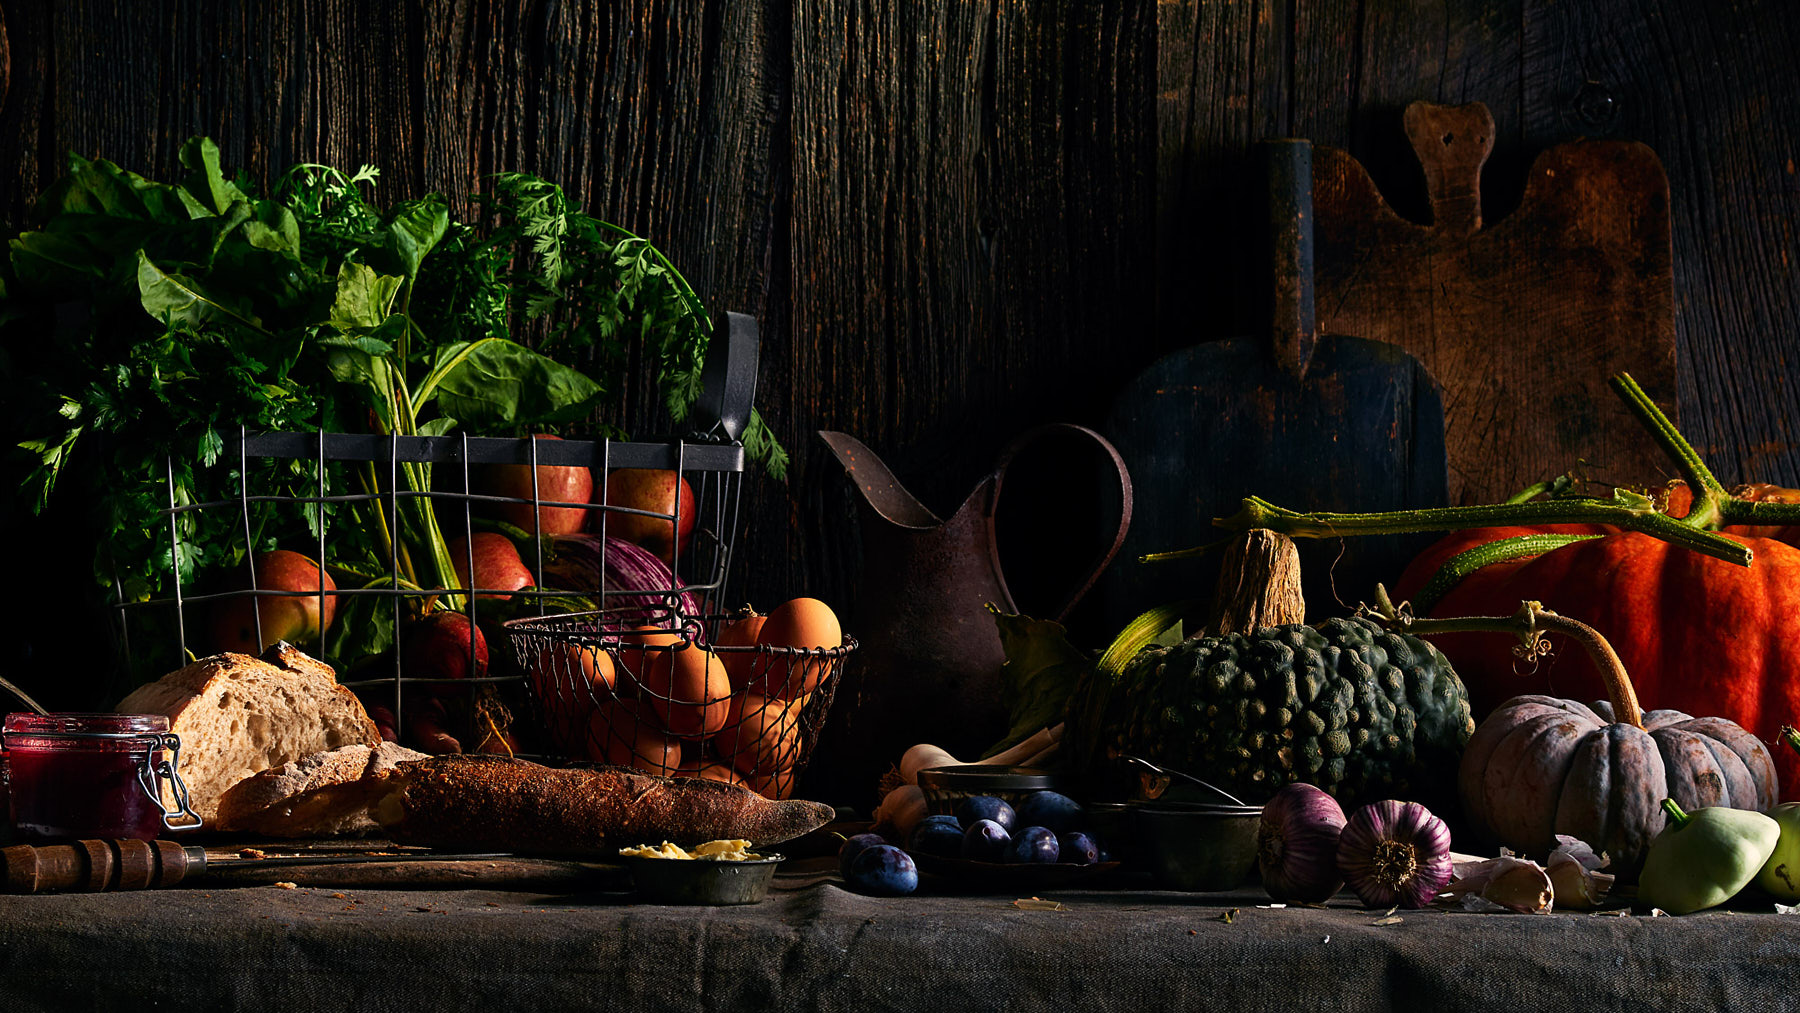 Harvest table of fresh produce